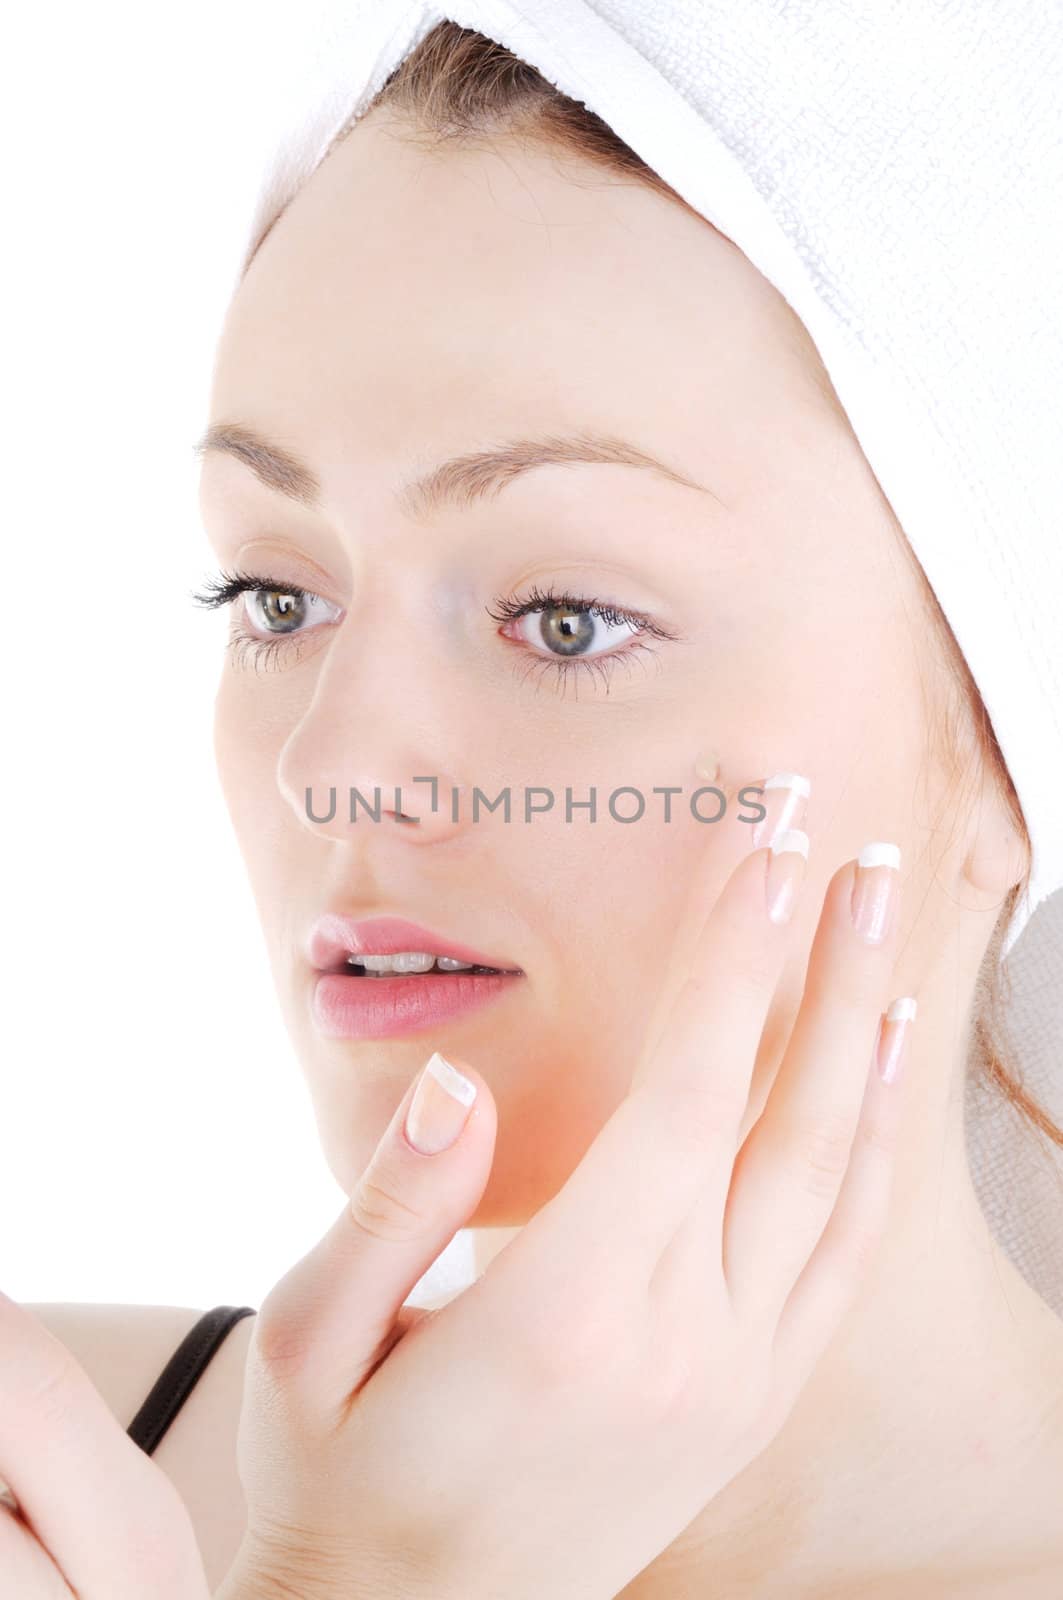 Cream appling on face skin by iryna_rasko